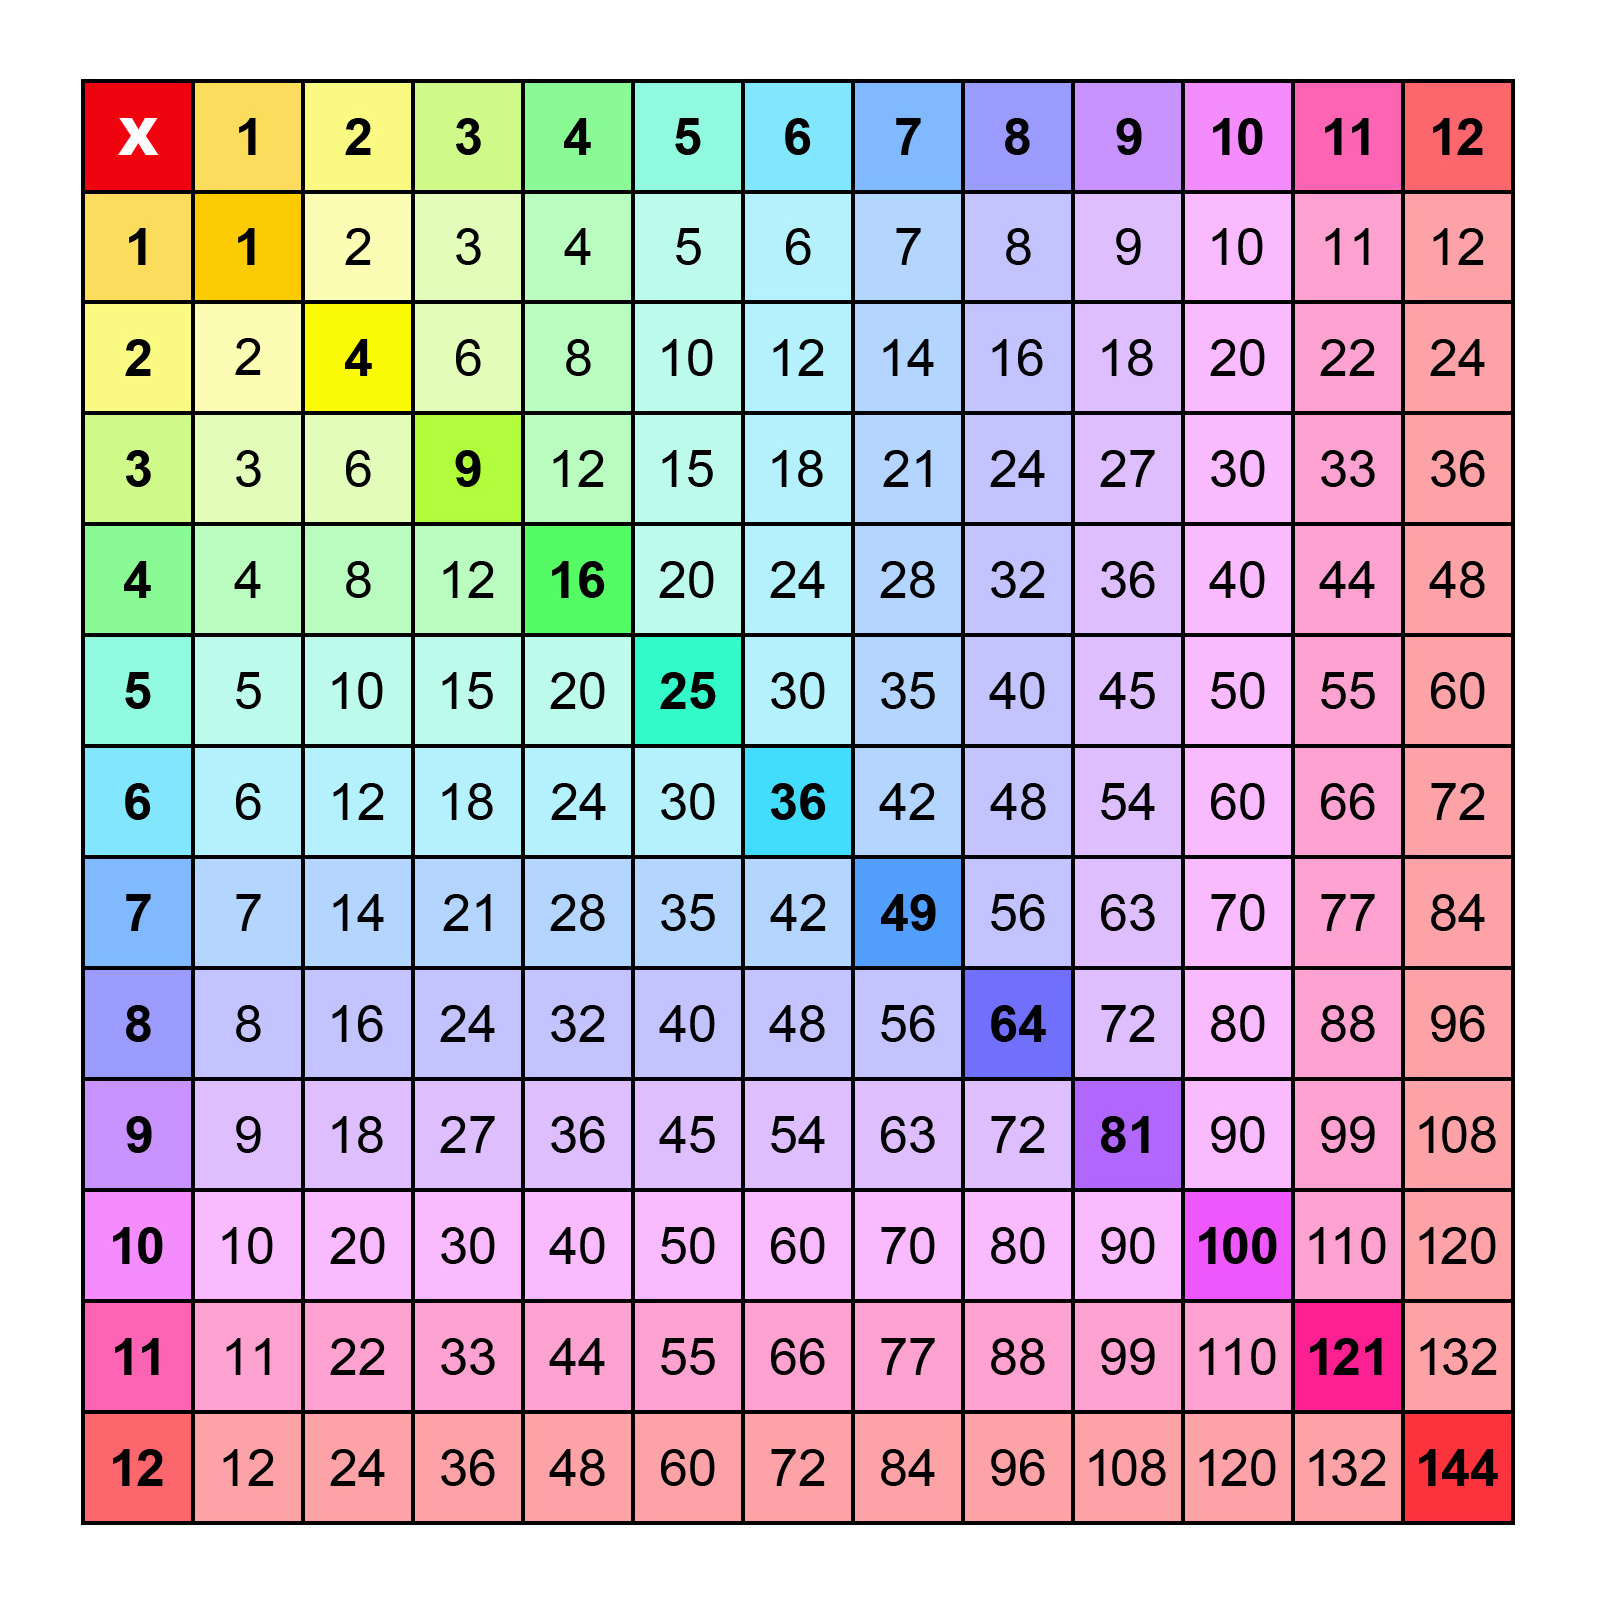 multiplication-table-pdf-1-100-bruin-blog